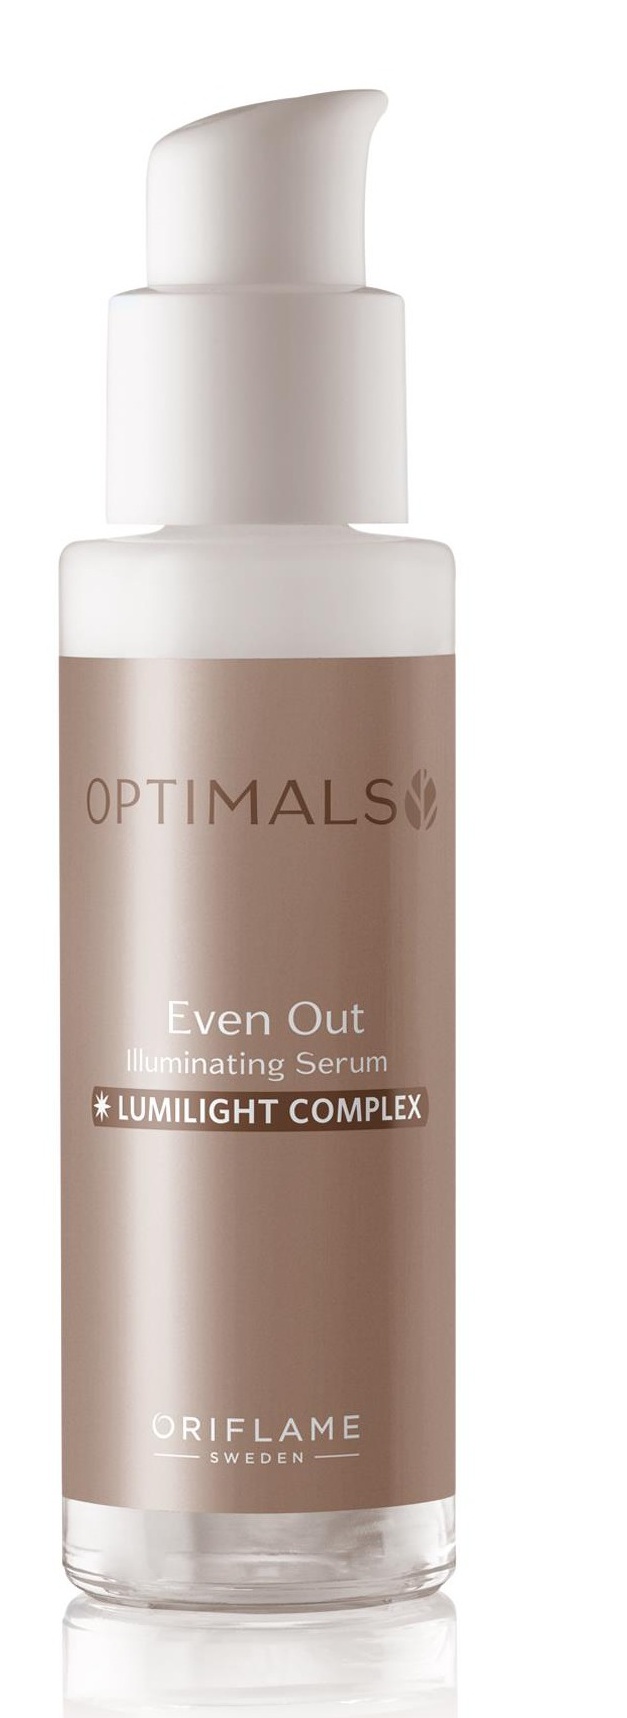 Oriflame Optimals Even Out Illuminating Serum